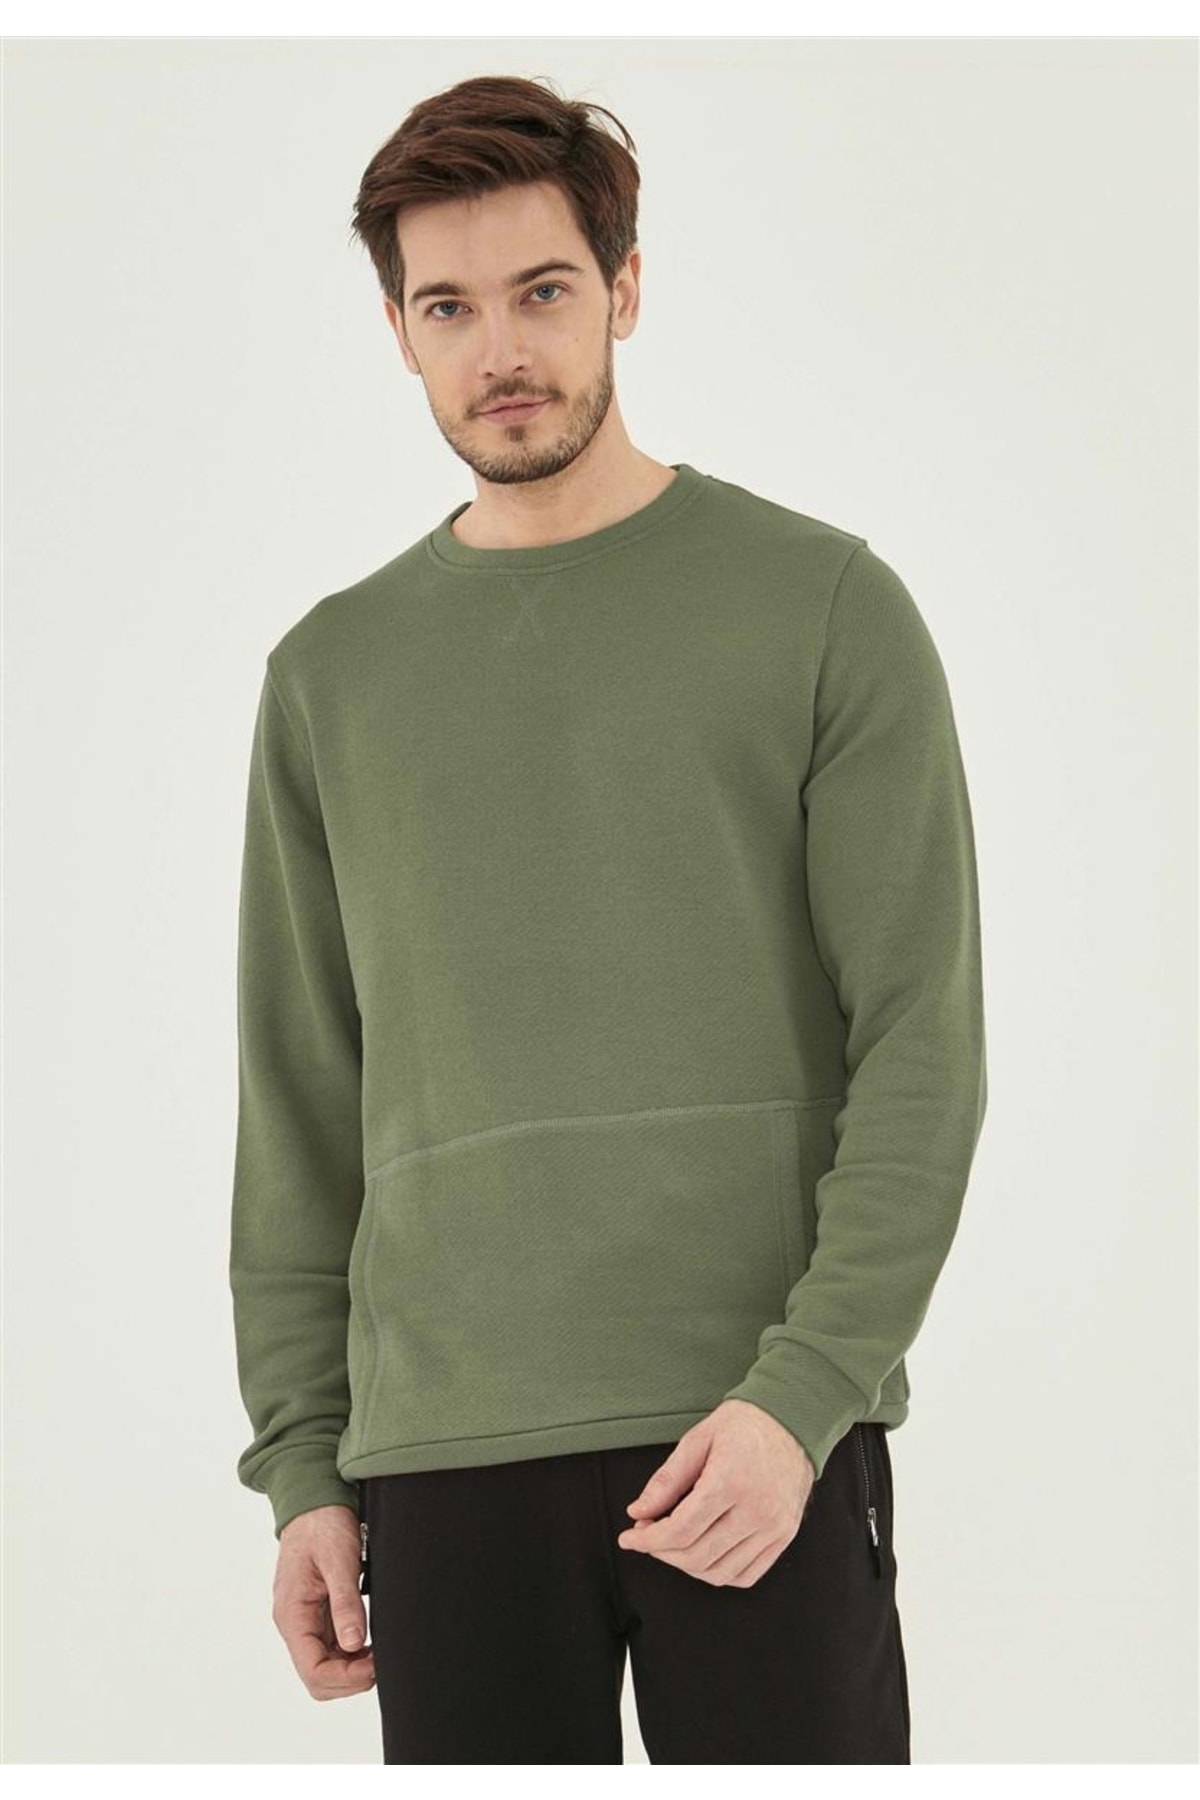 ORGANICATION Sweatshirt Khaki Regular Fit Fast ausverkauft